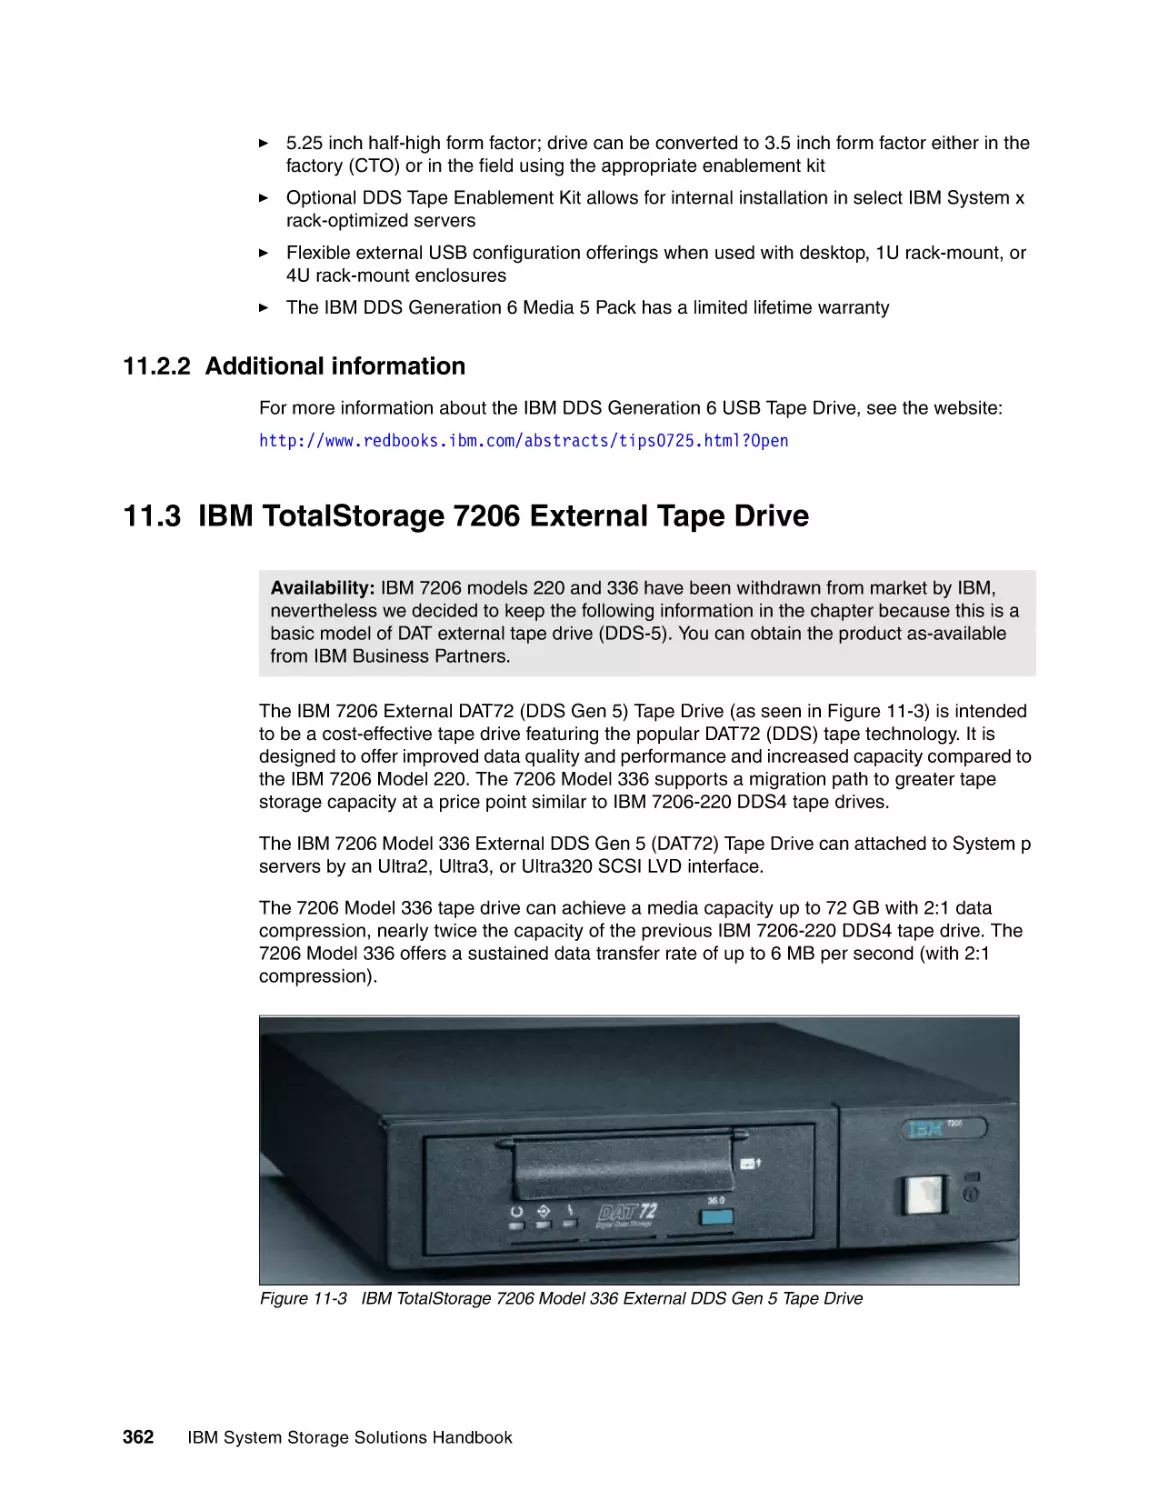 11.2.2 Additional information
11.3 IBM TotalStorage 7206 External Tape Drive